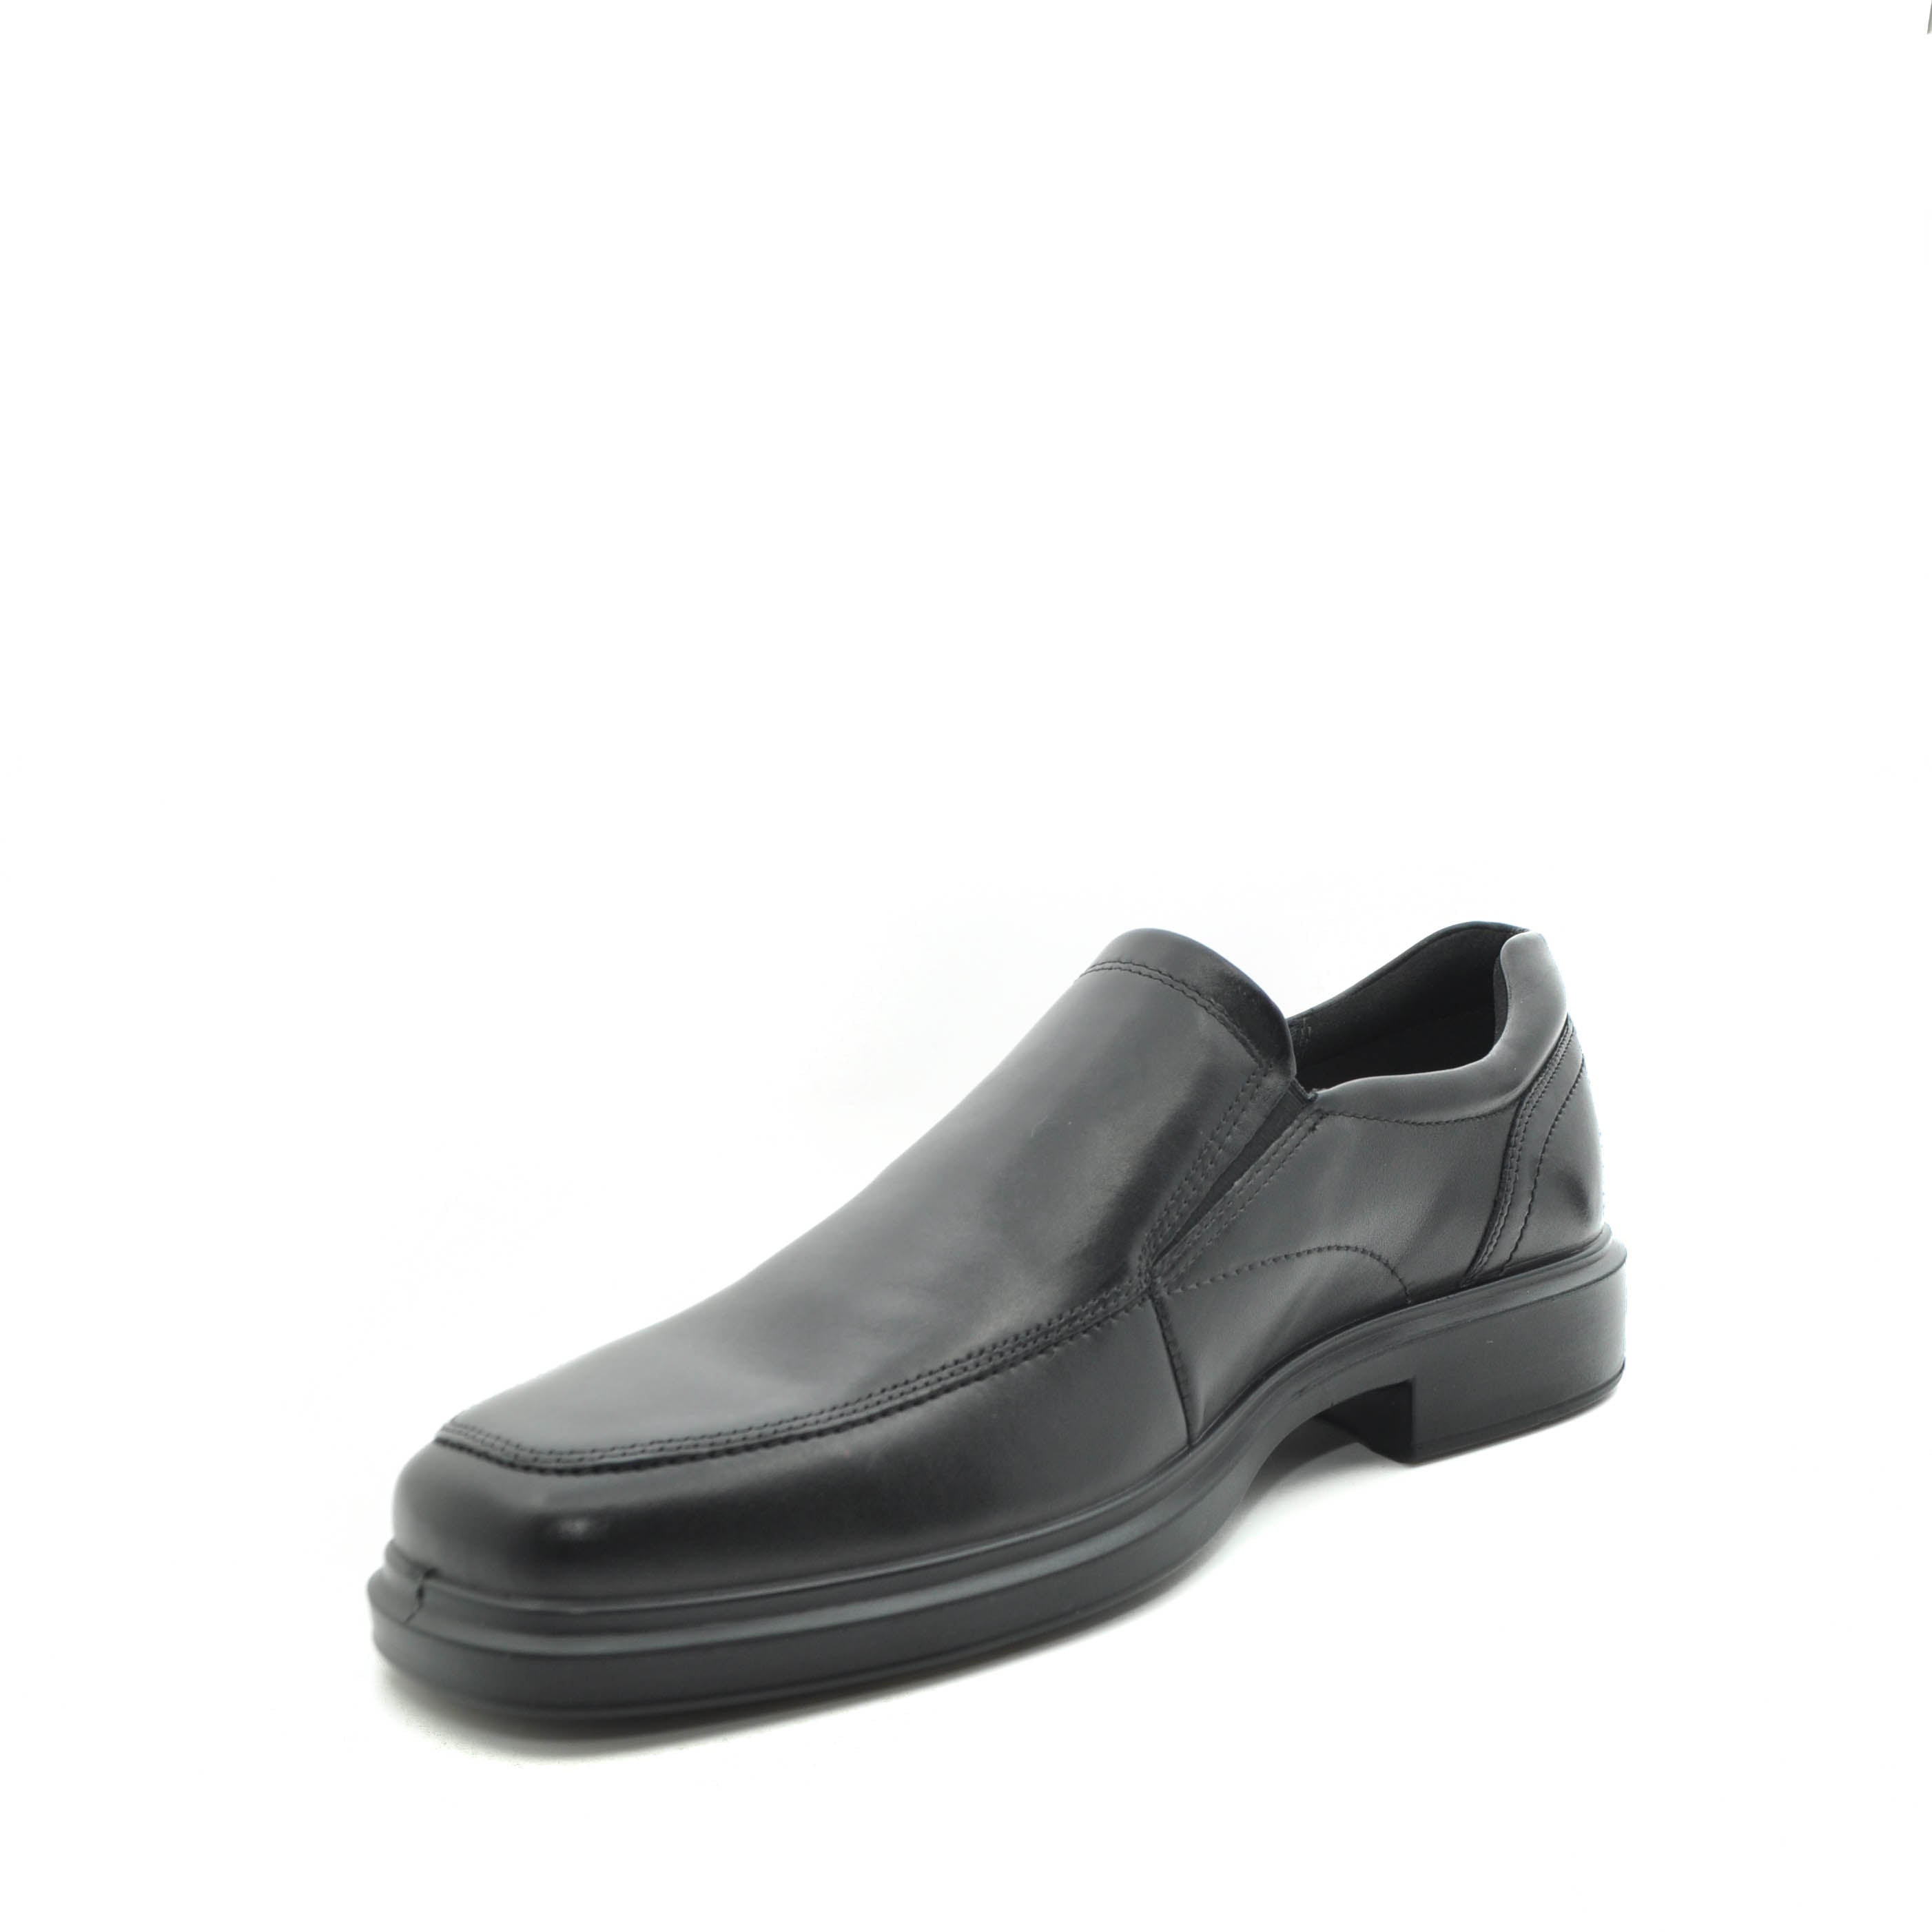 ecco black slip on shoes